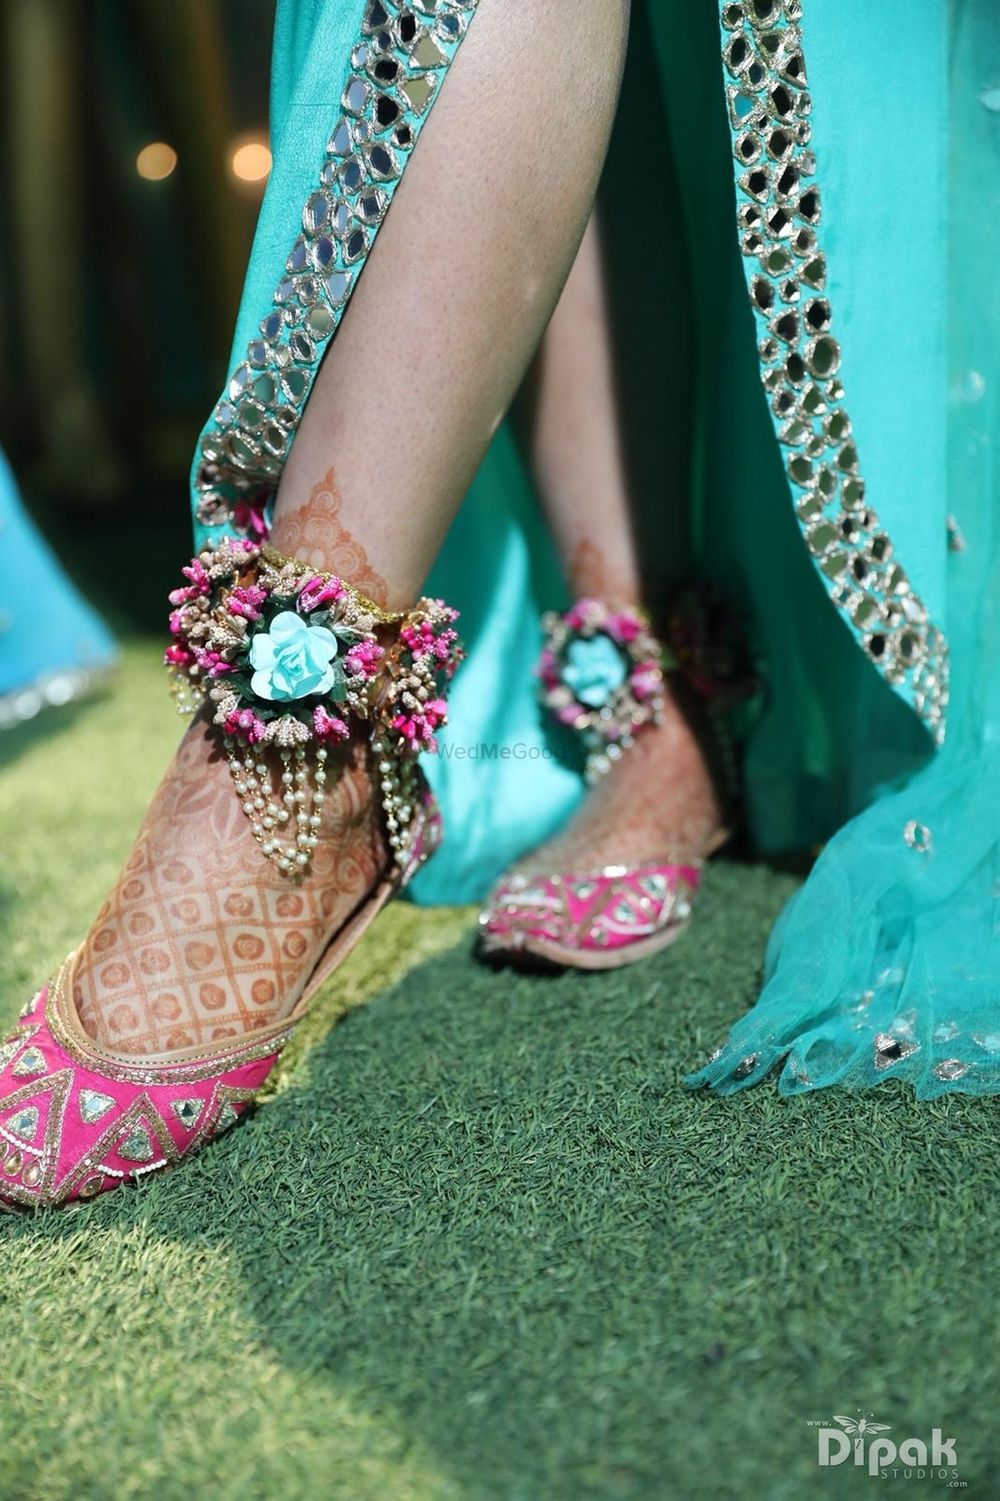 Photo of Bridal juttis and floral anklets